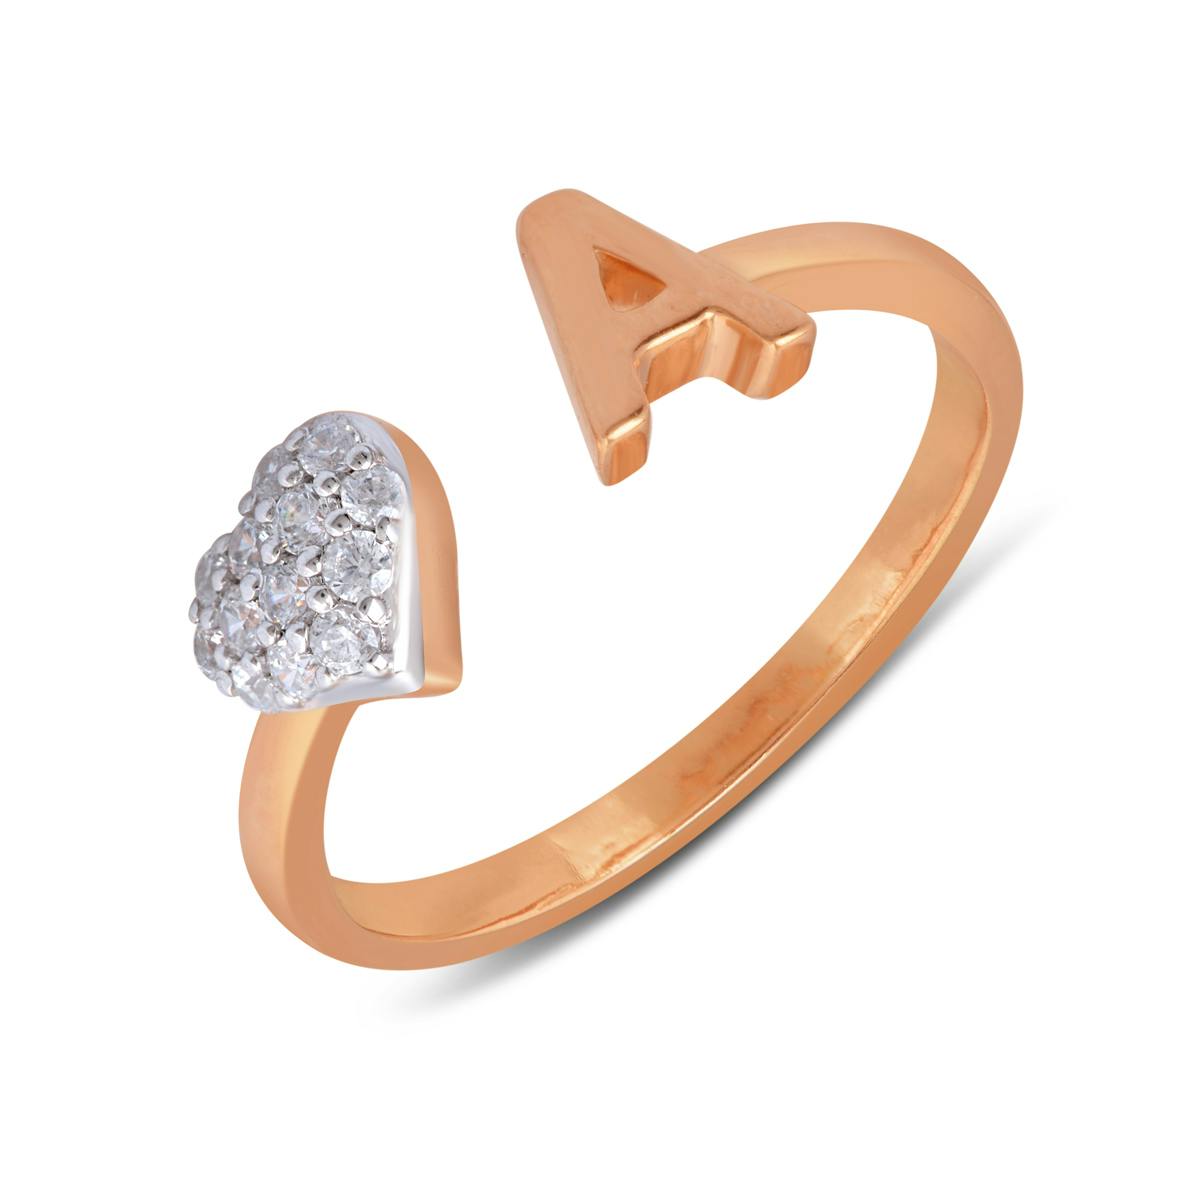 Aakriti diamond ring